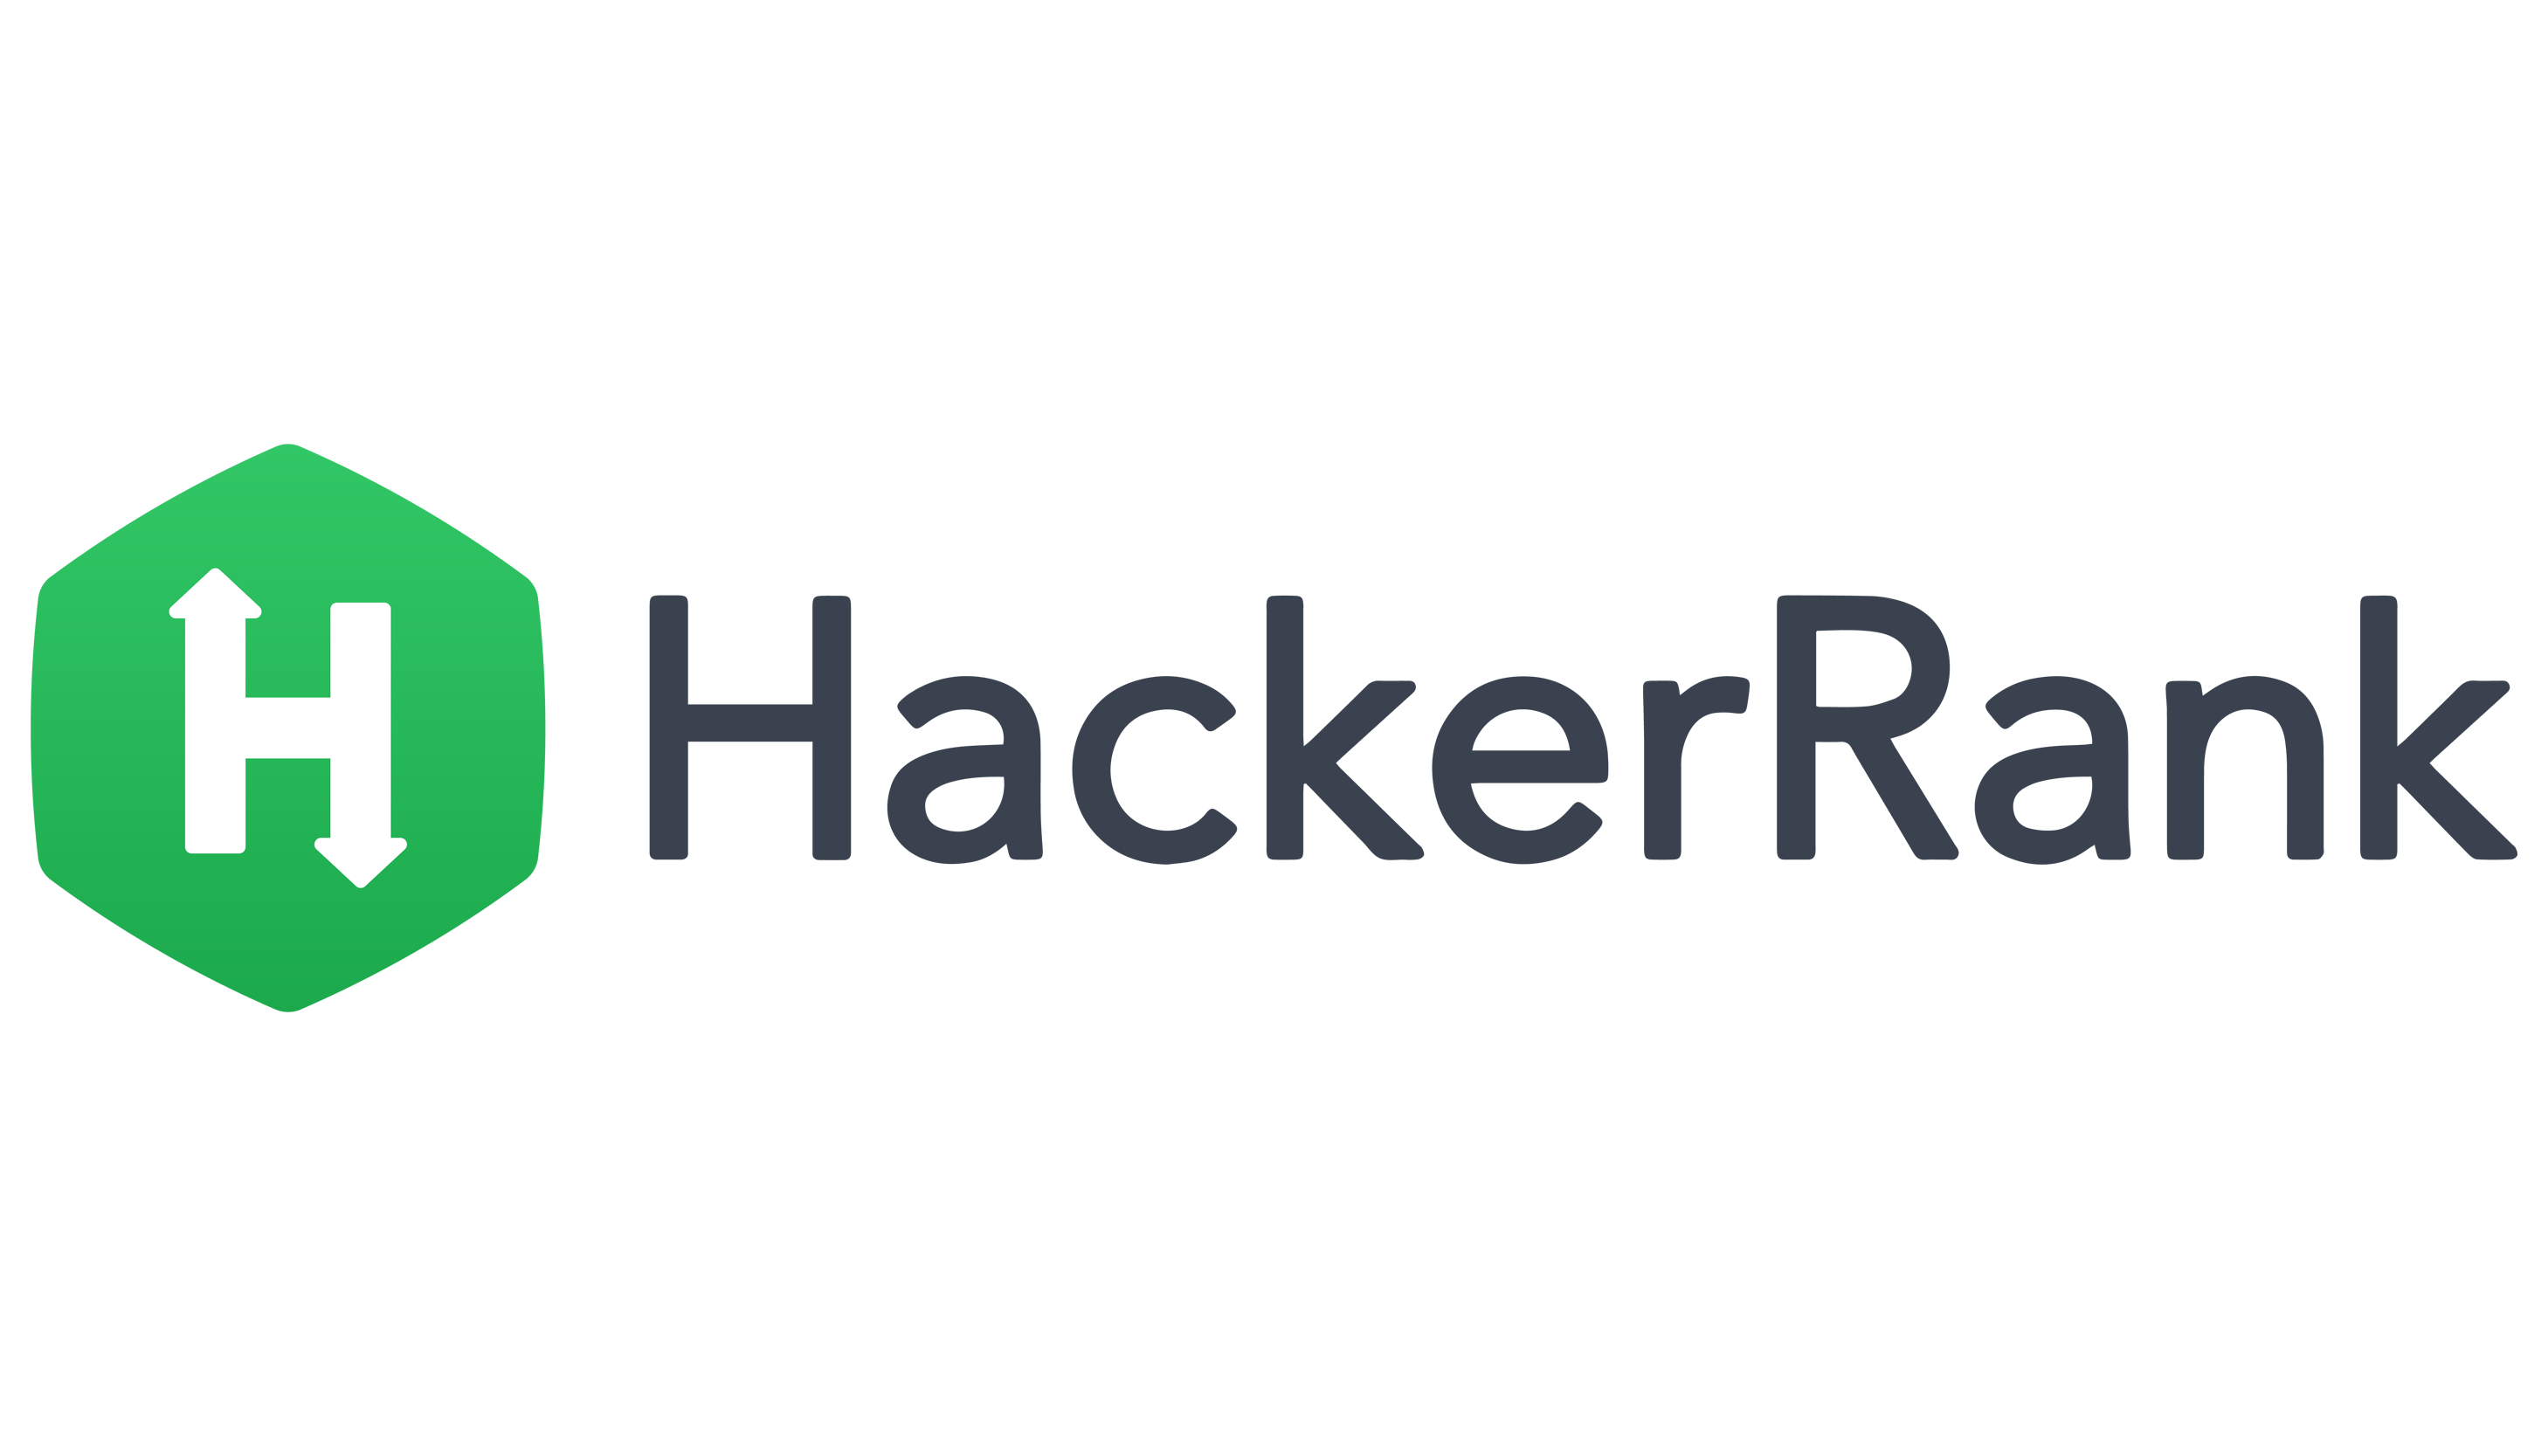 Arbitrary file read vulnerability in Hackerrank